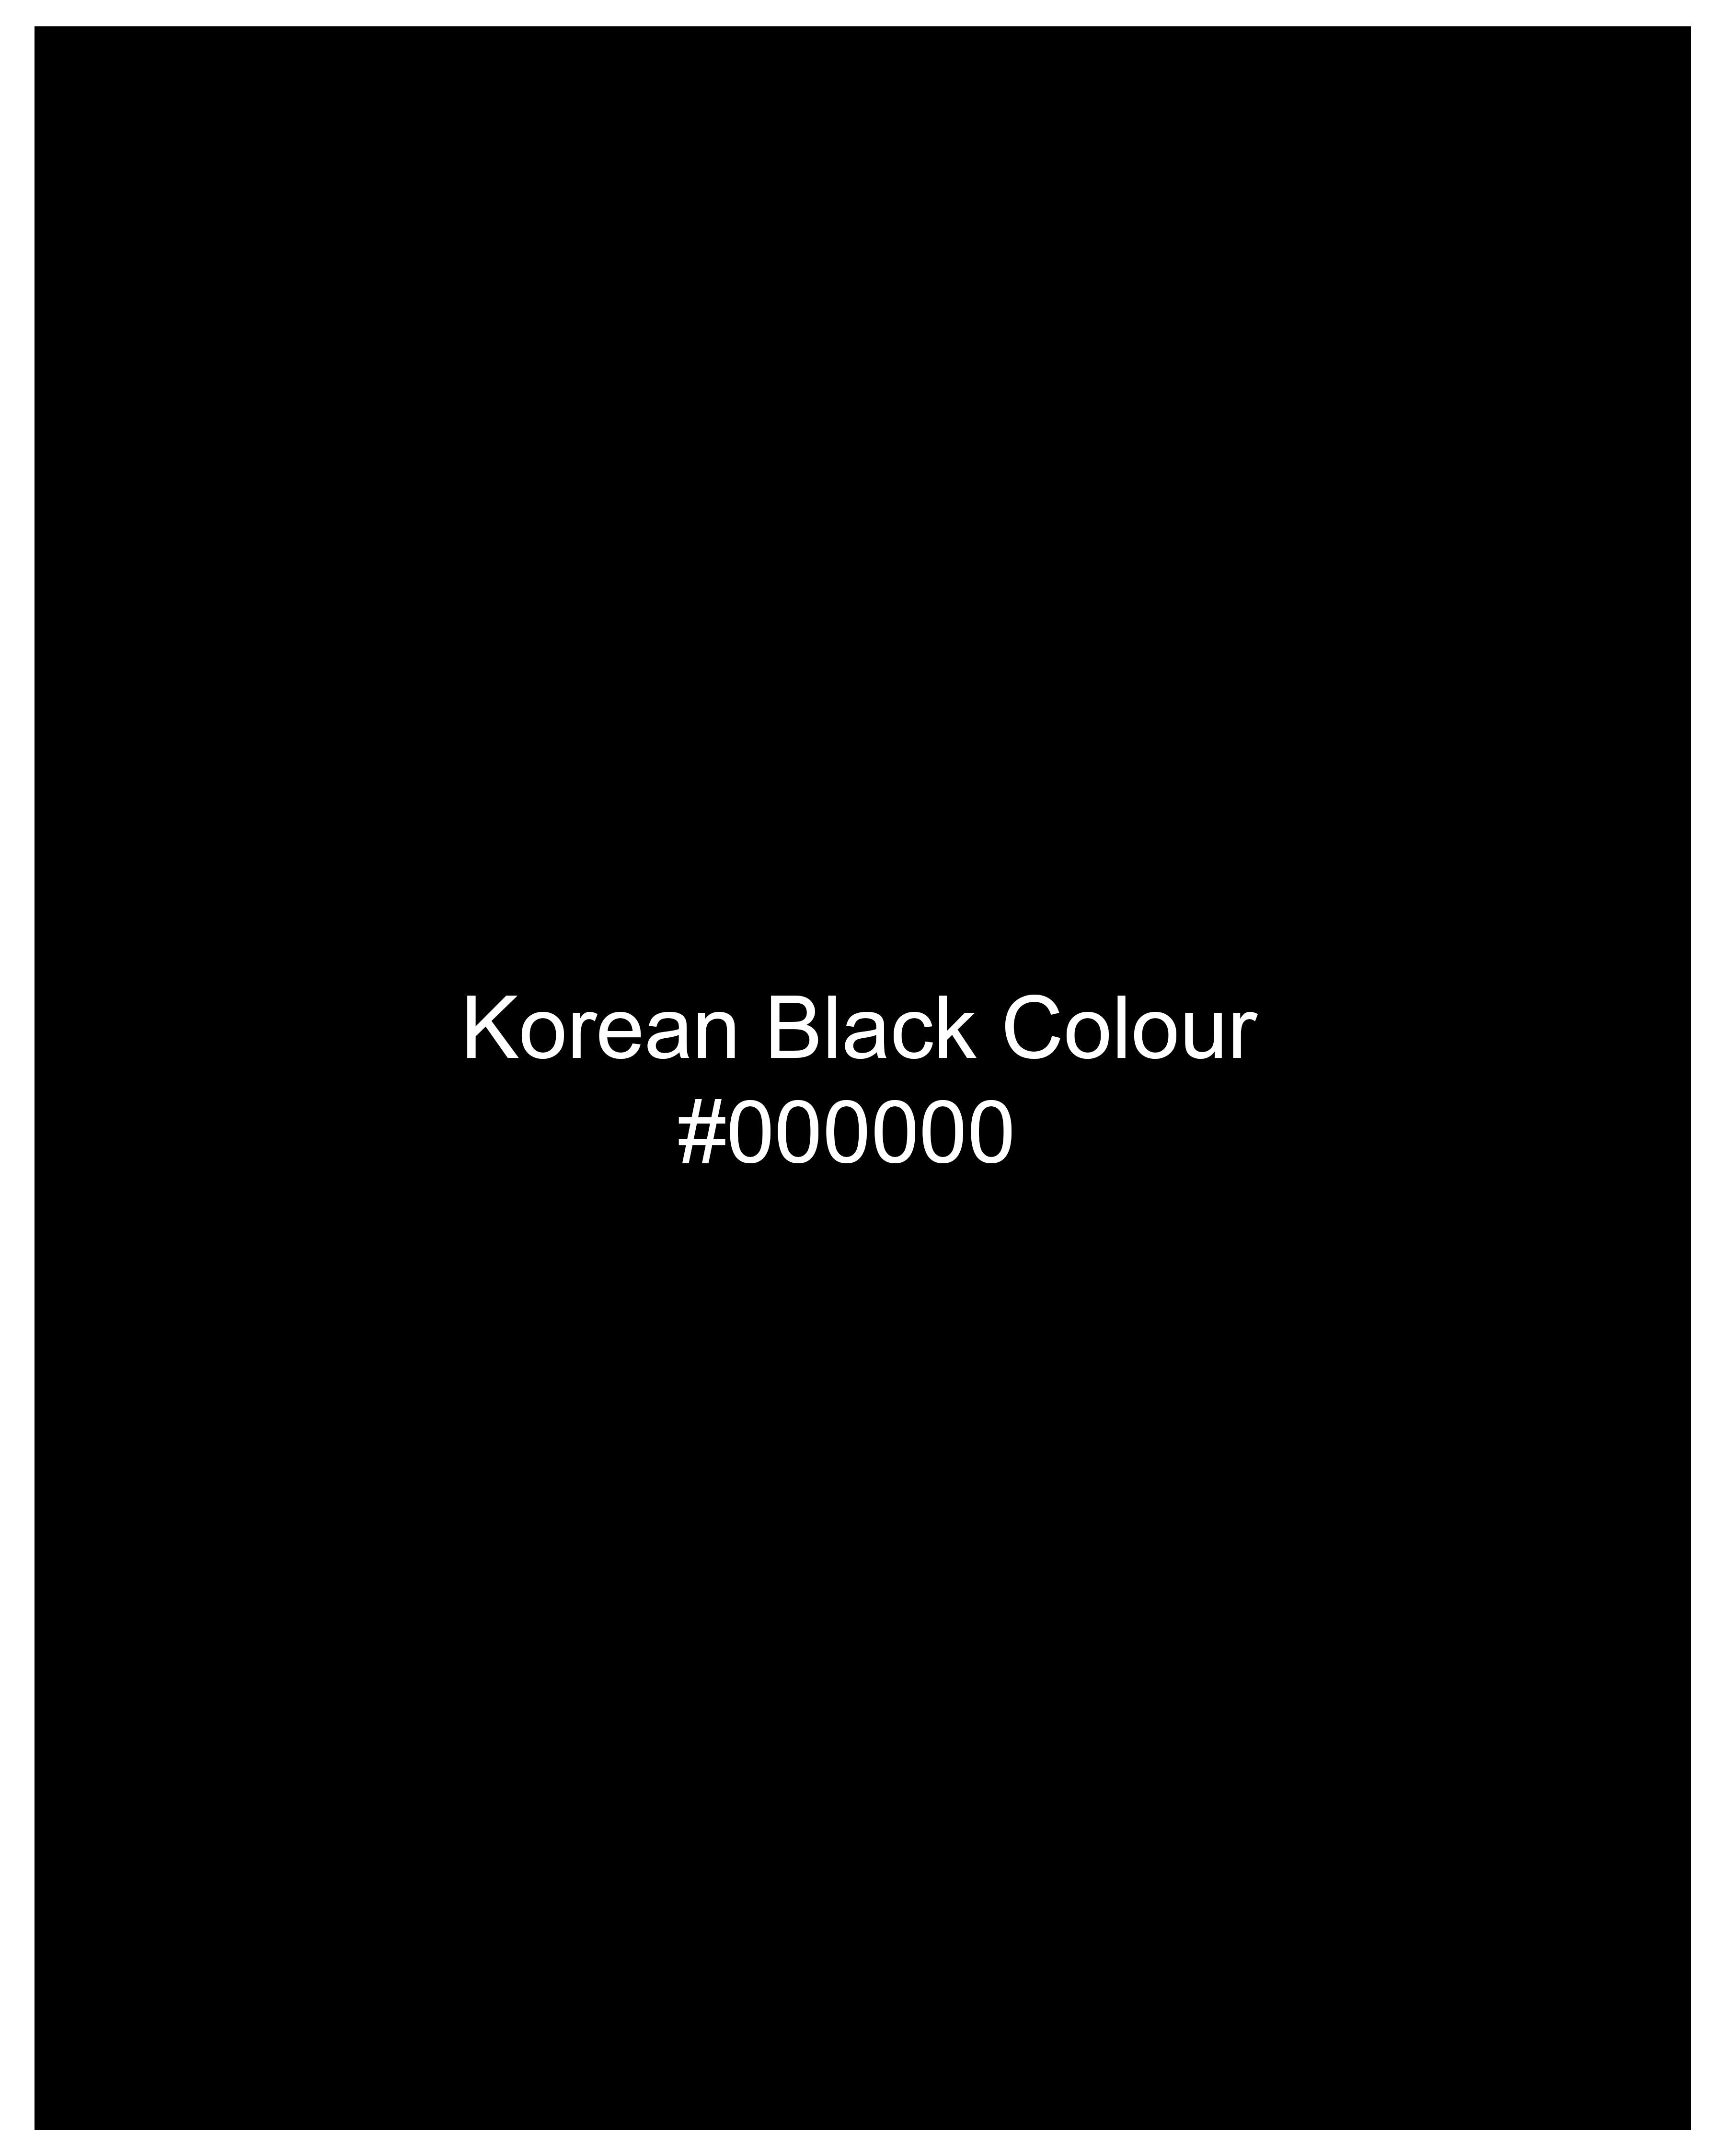 Korean Black (The Best Black We Have) Bandhgala Suit ST2606-BG-36, ST2606-BG-38, ST2606-BG-40, ST2606-BG-42, ST2606-BG-44, ST2606-BG-46, ST2606-BG-48, ST2606-BG-50, ST2606-BG-52, ST2606-BG-54, ST2606-BG-56, ST2606-BG-58, ST2606-BG-60